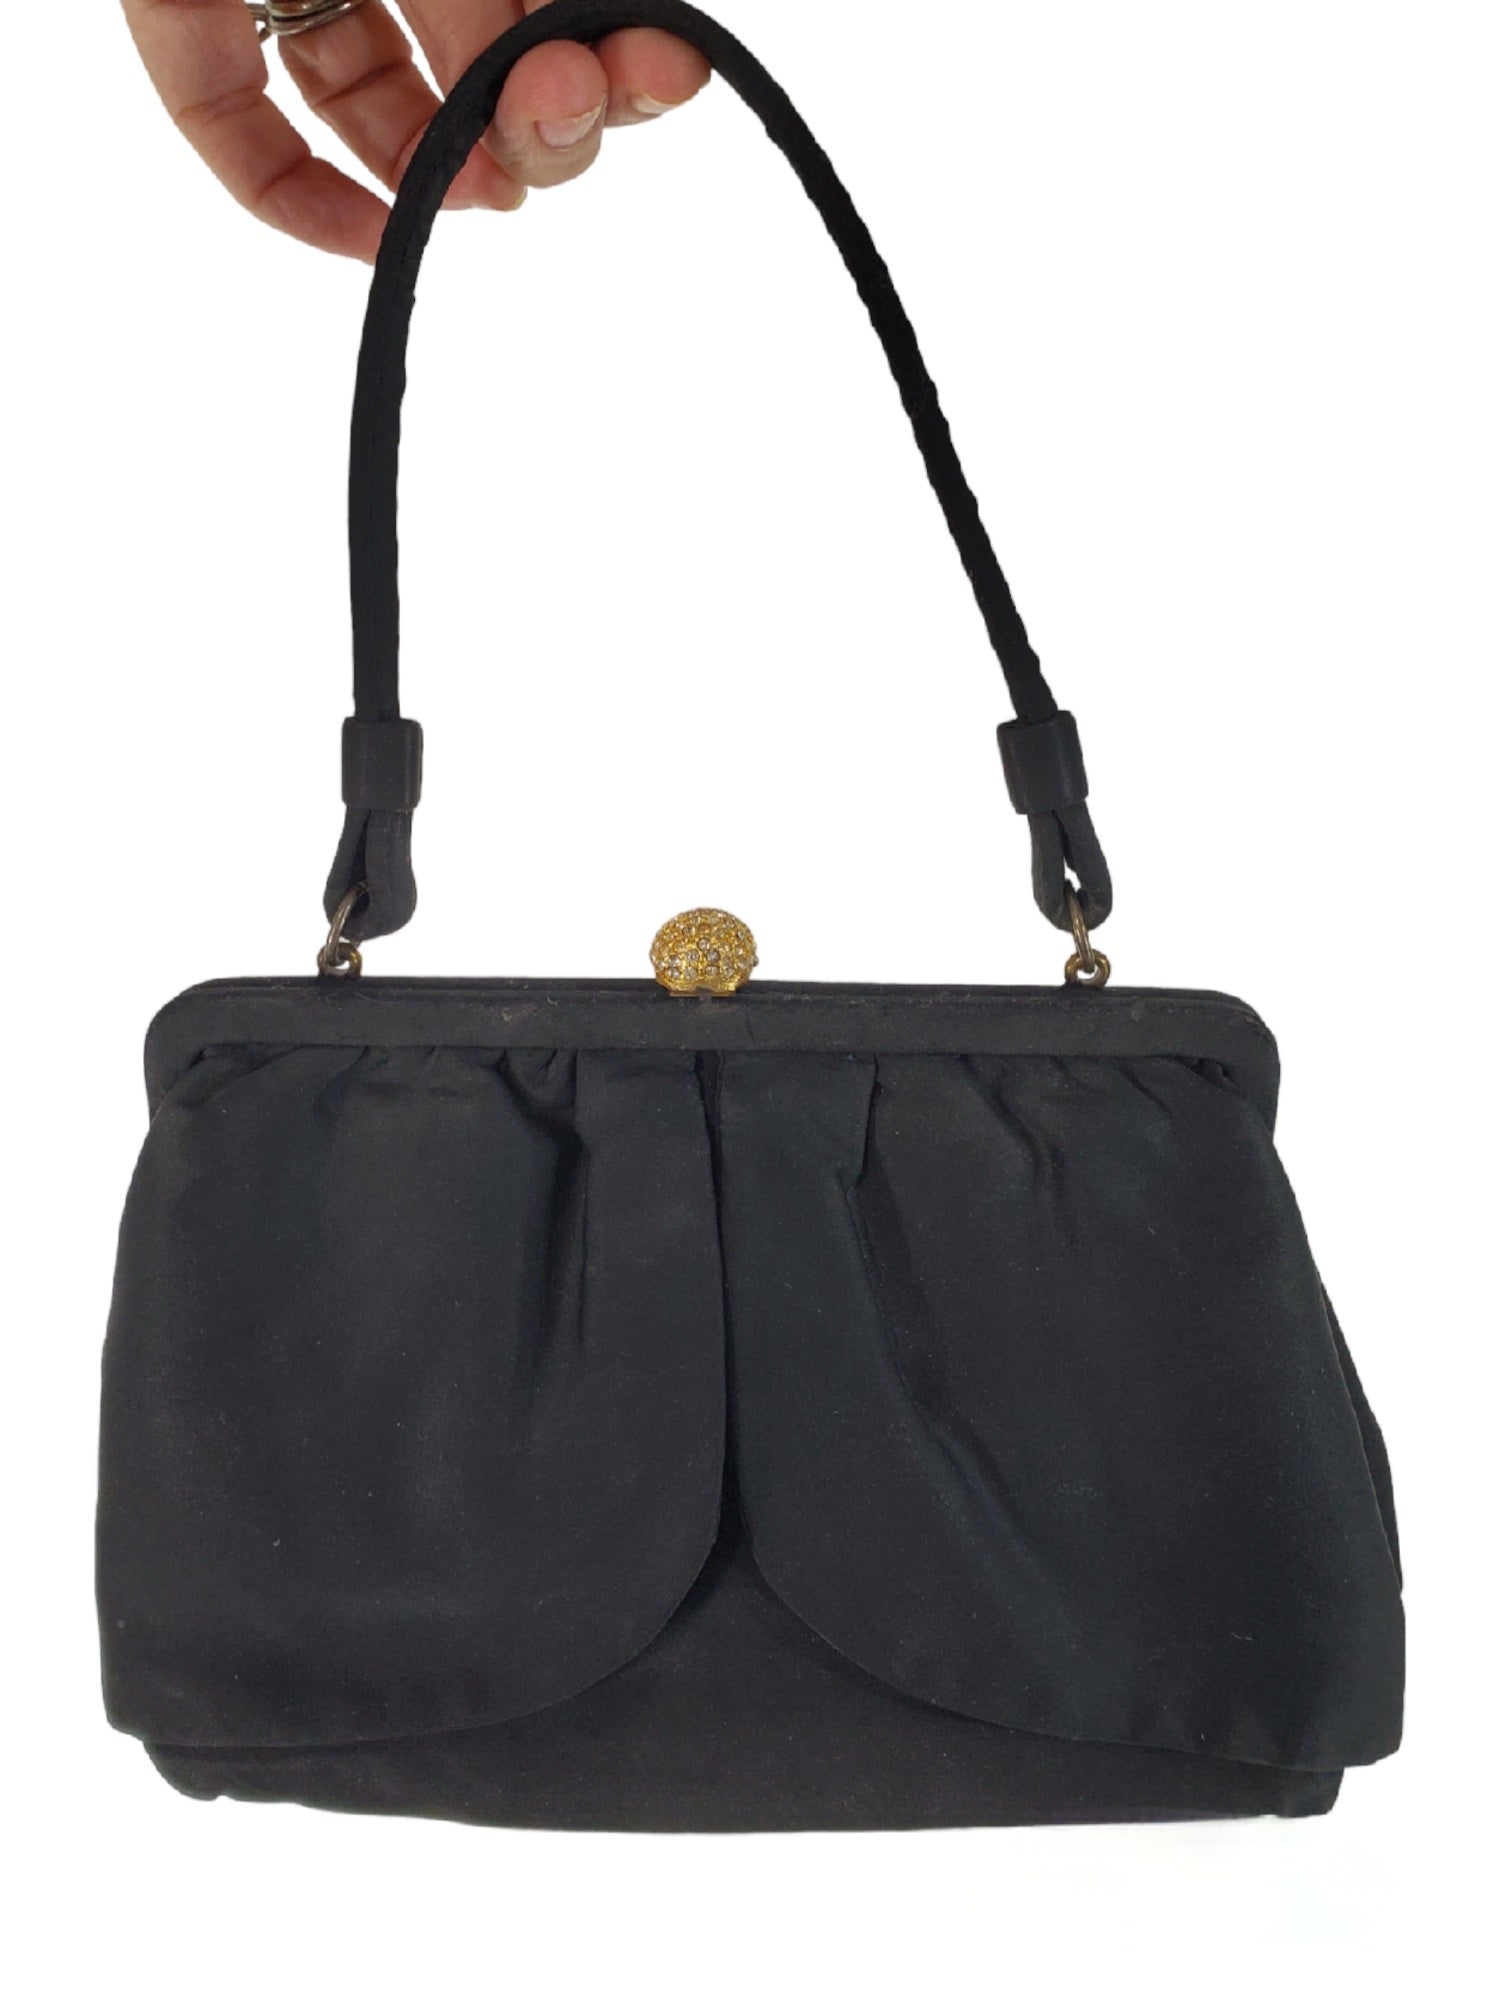 the-S brand : vintage-style, clip frame purse Kit | gifts | the-stitchery